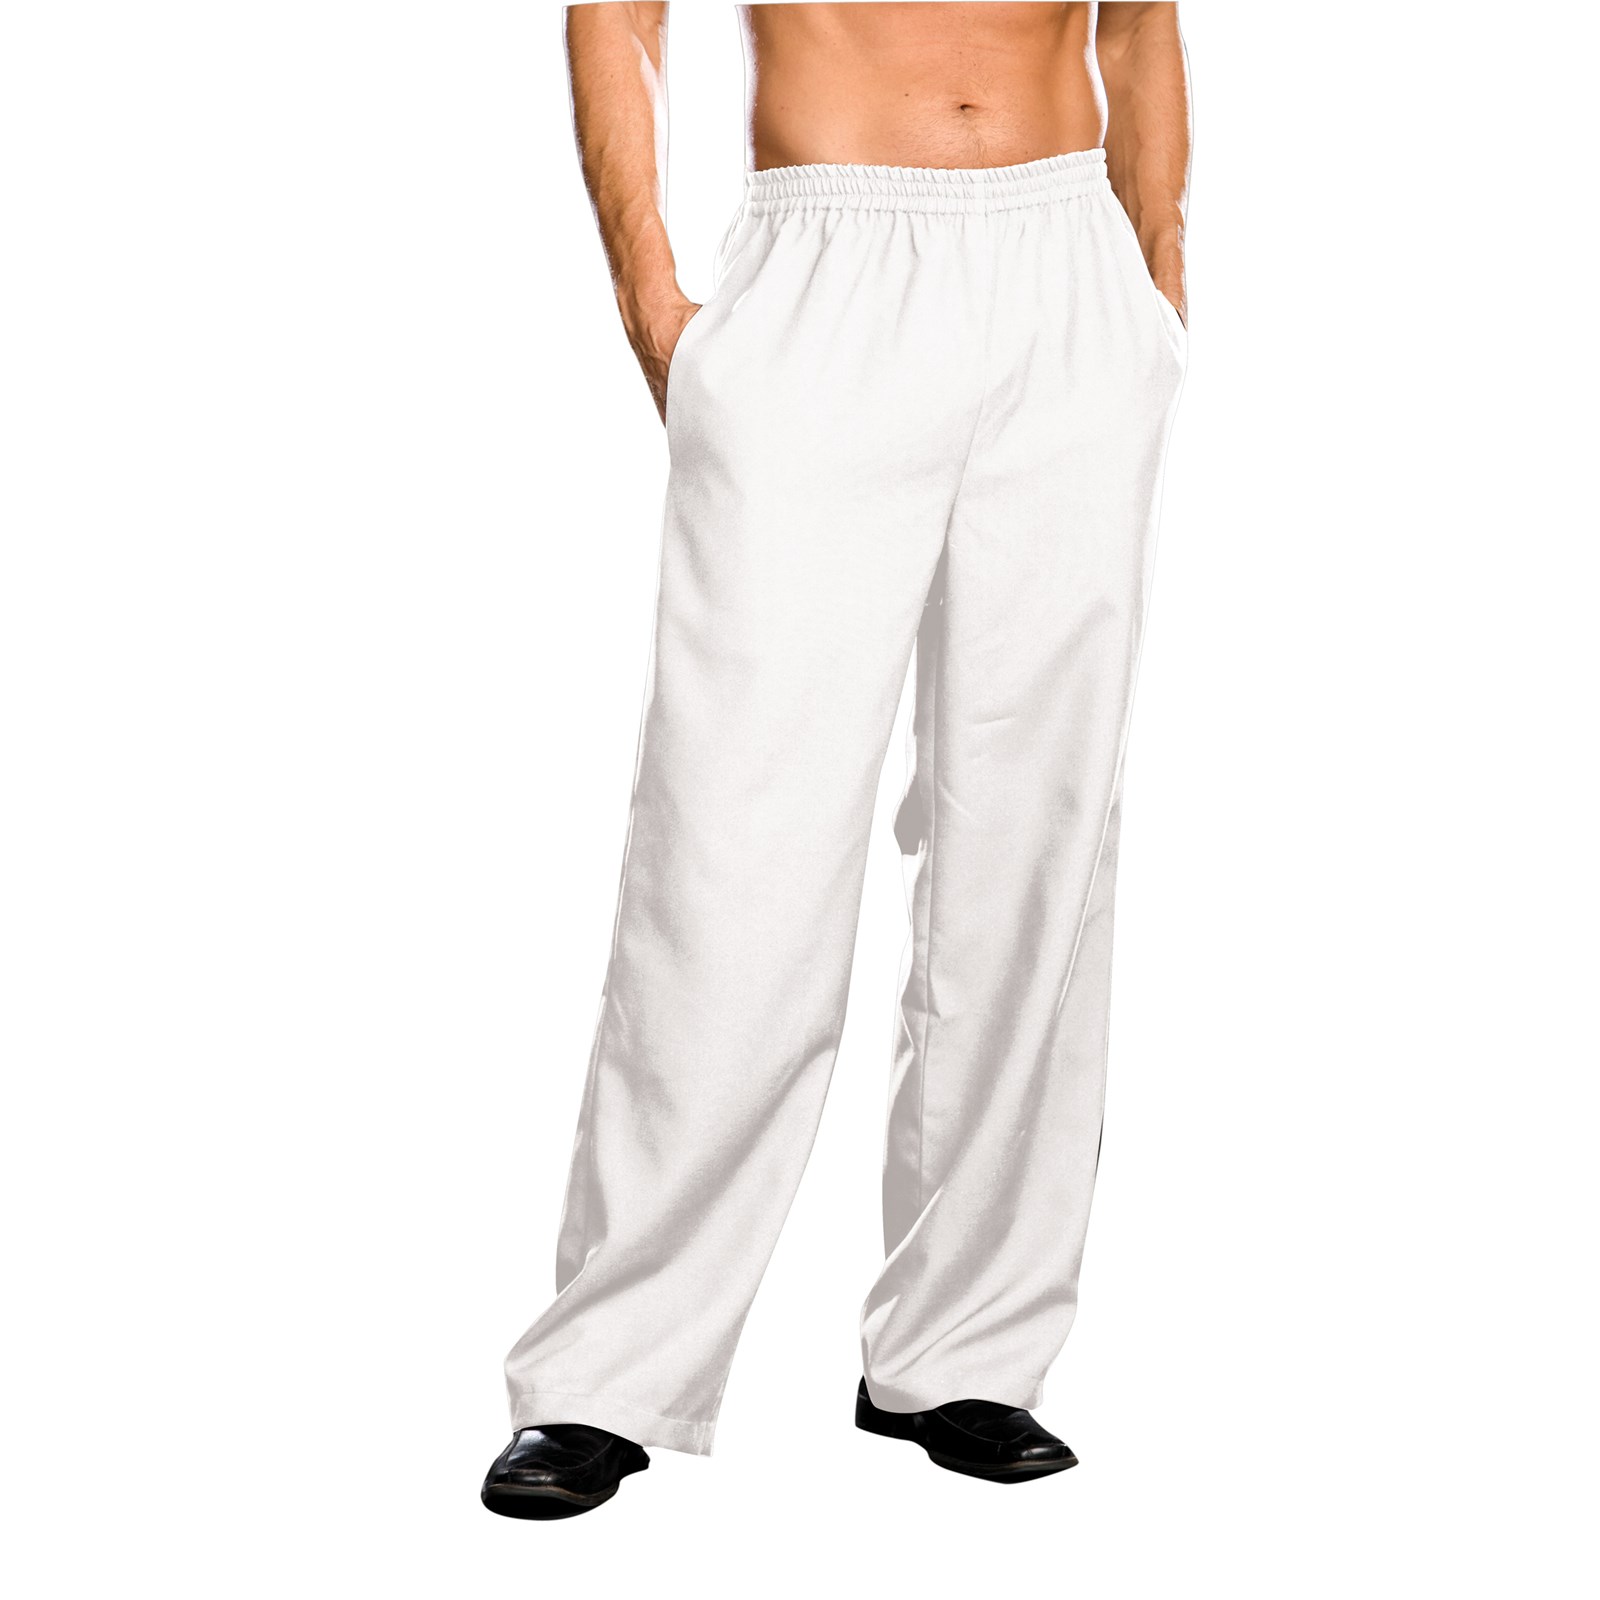 Men's White Pants (Adult) | BuyCostumes.com